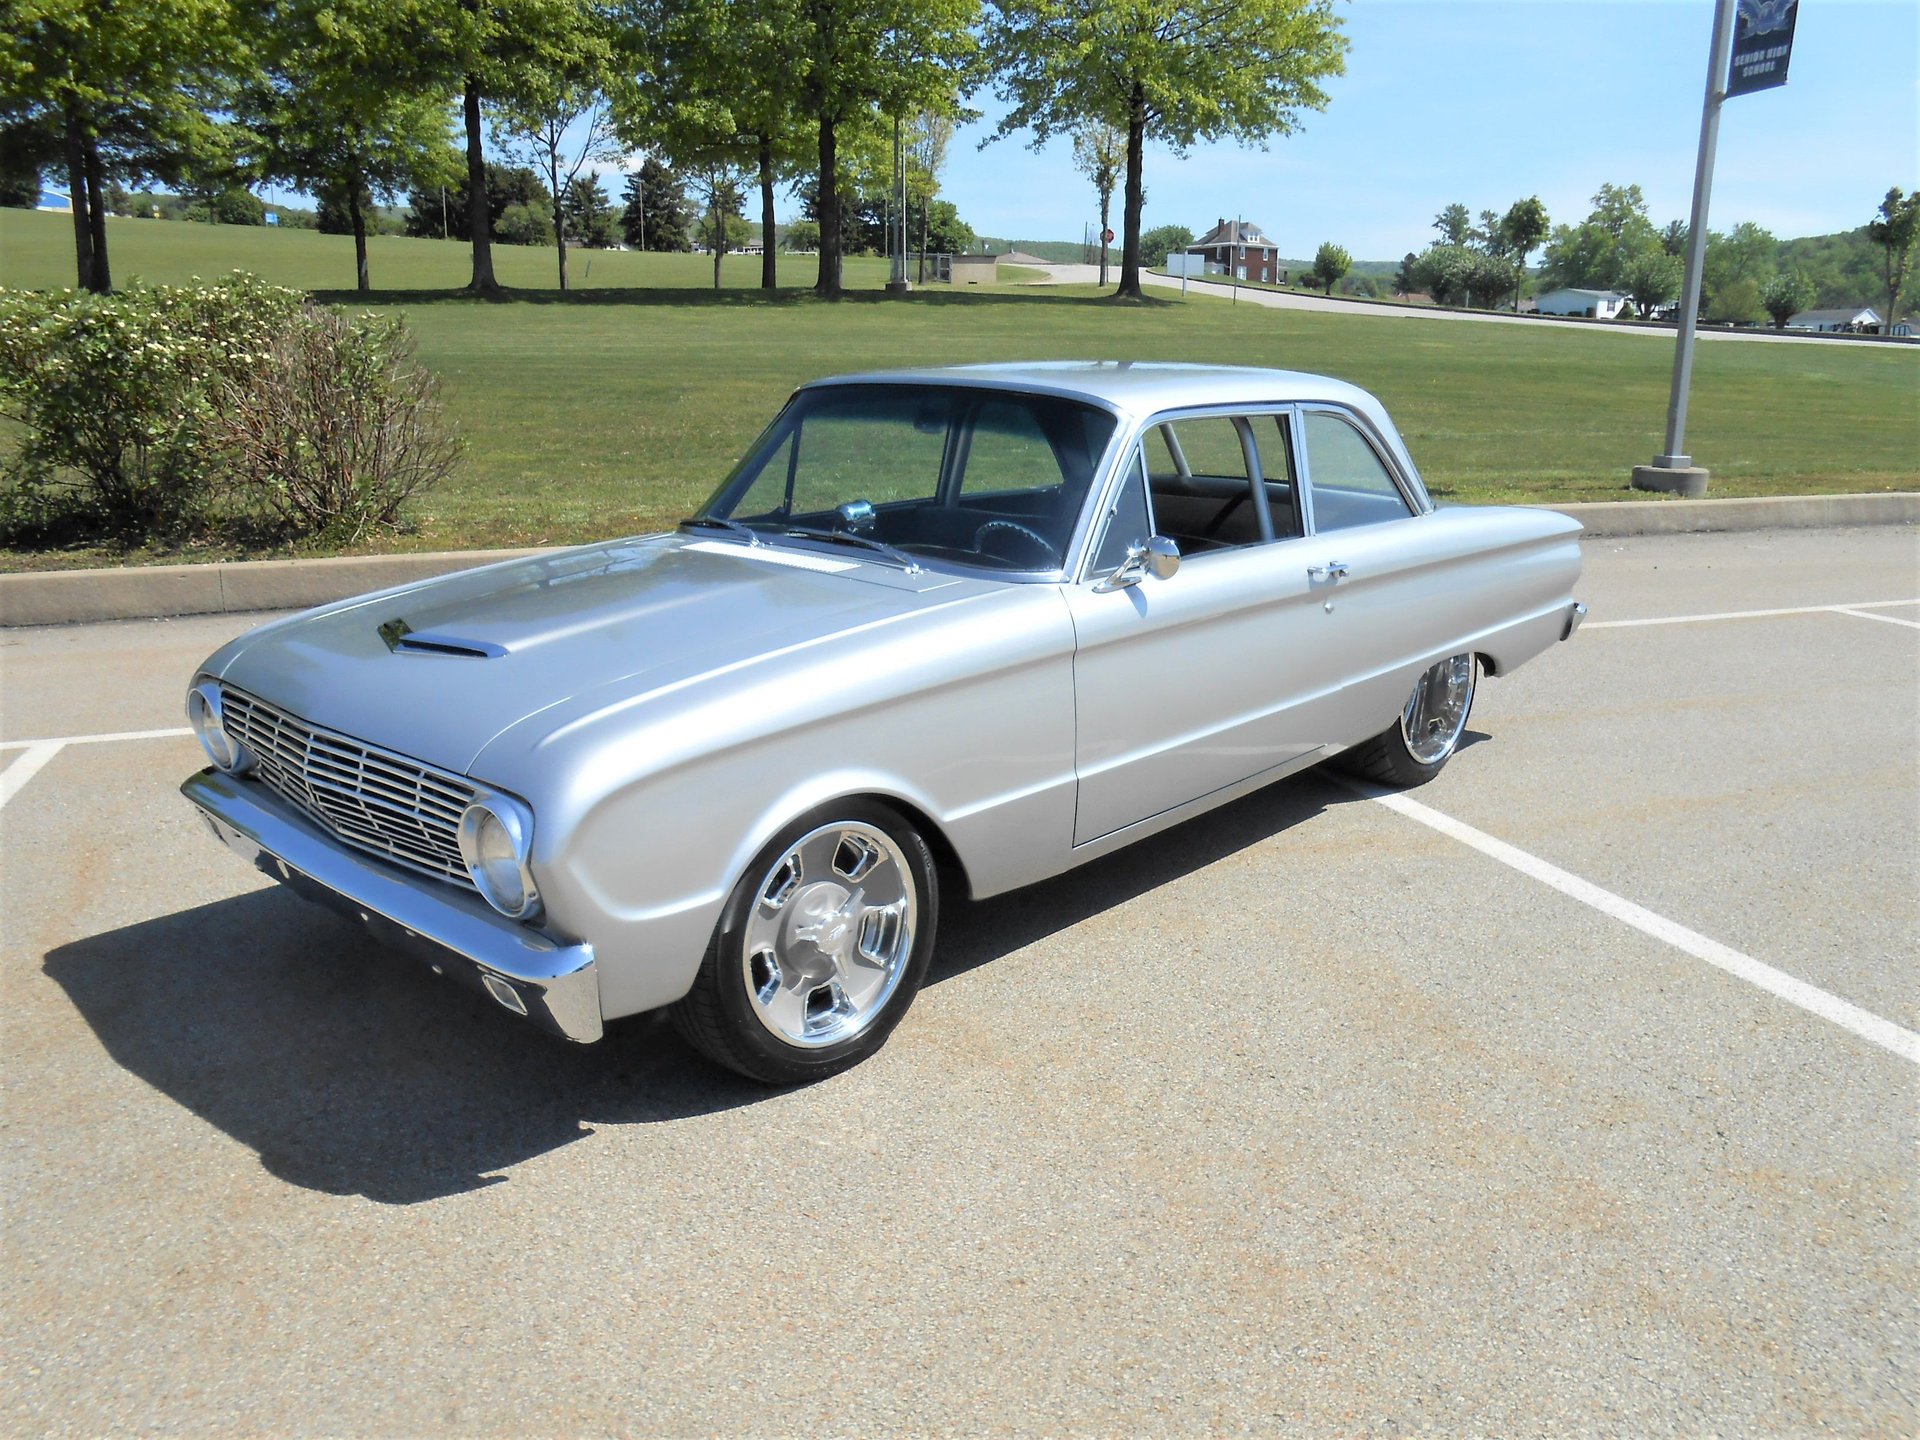 1962 Ford Falcon | Gaa Classic Cars